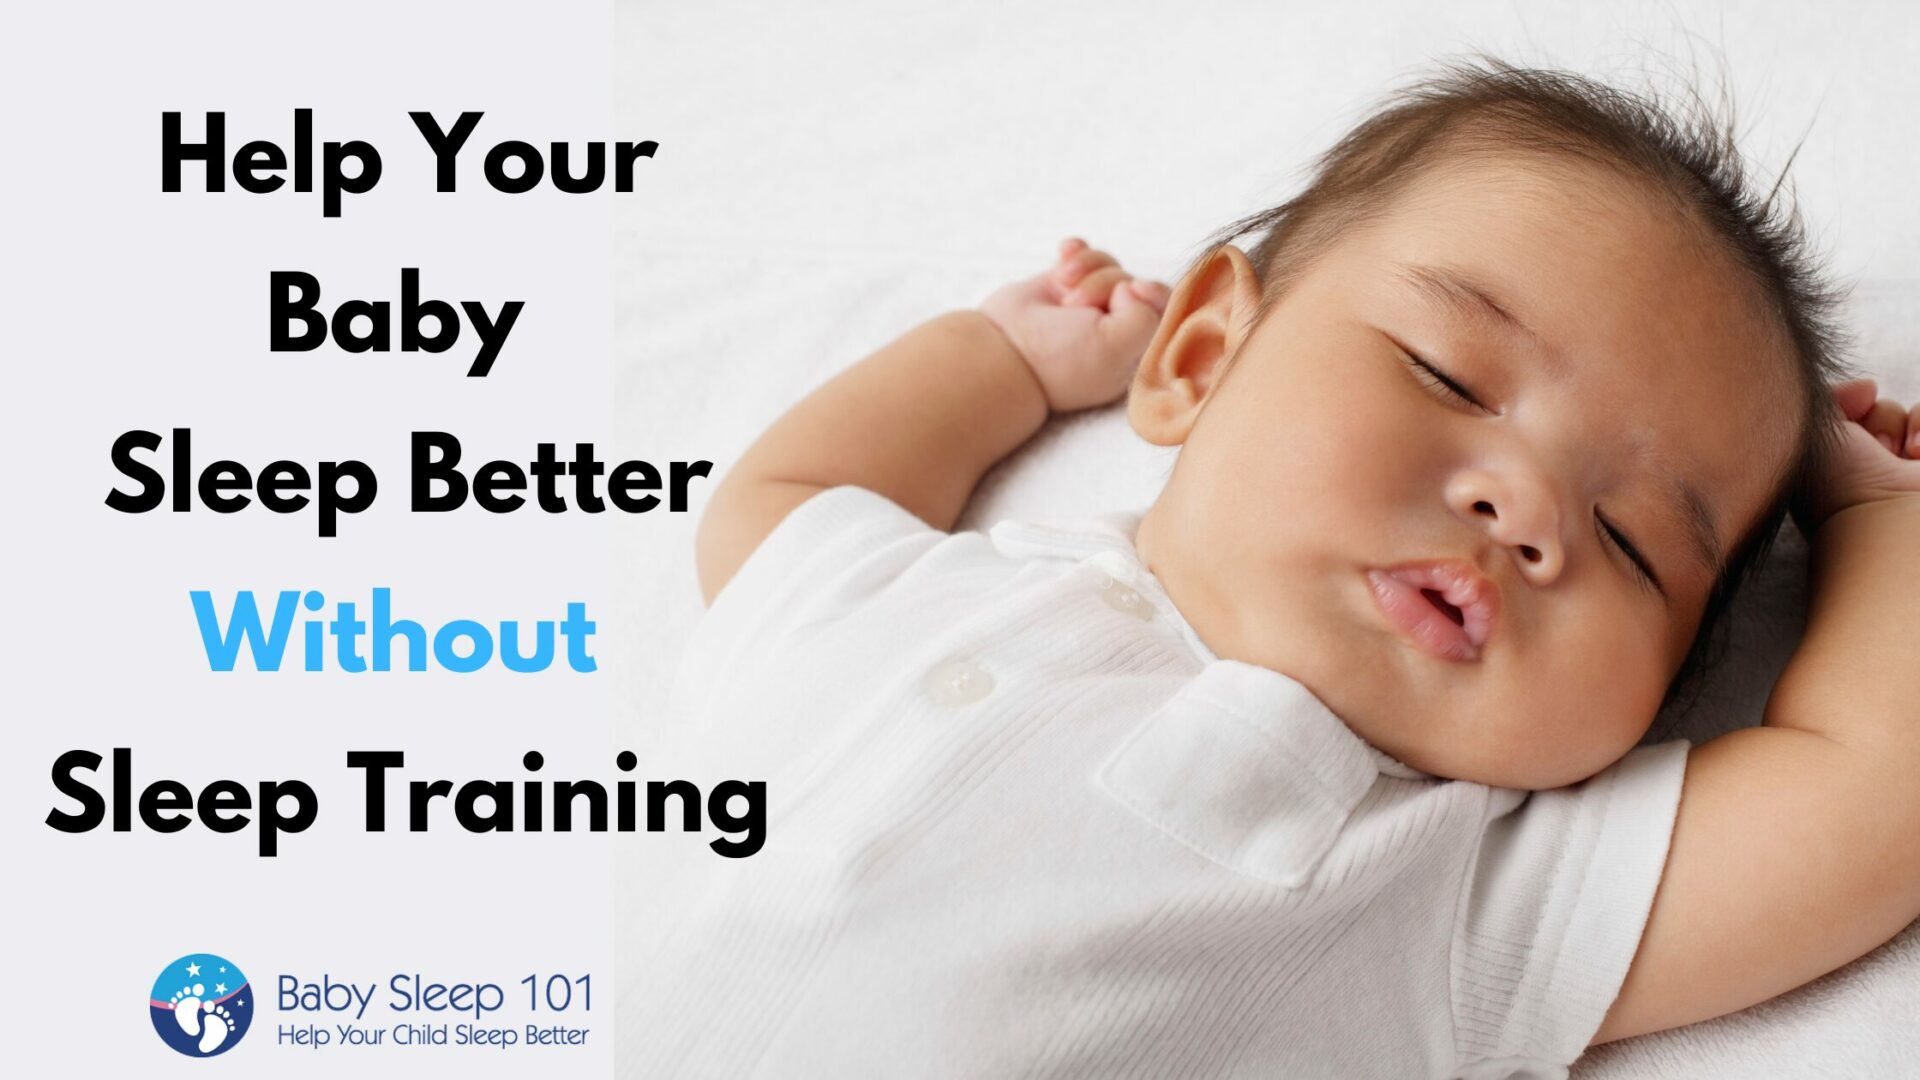 Help your baby sleep better without sleep training